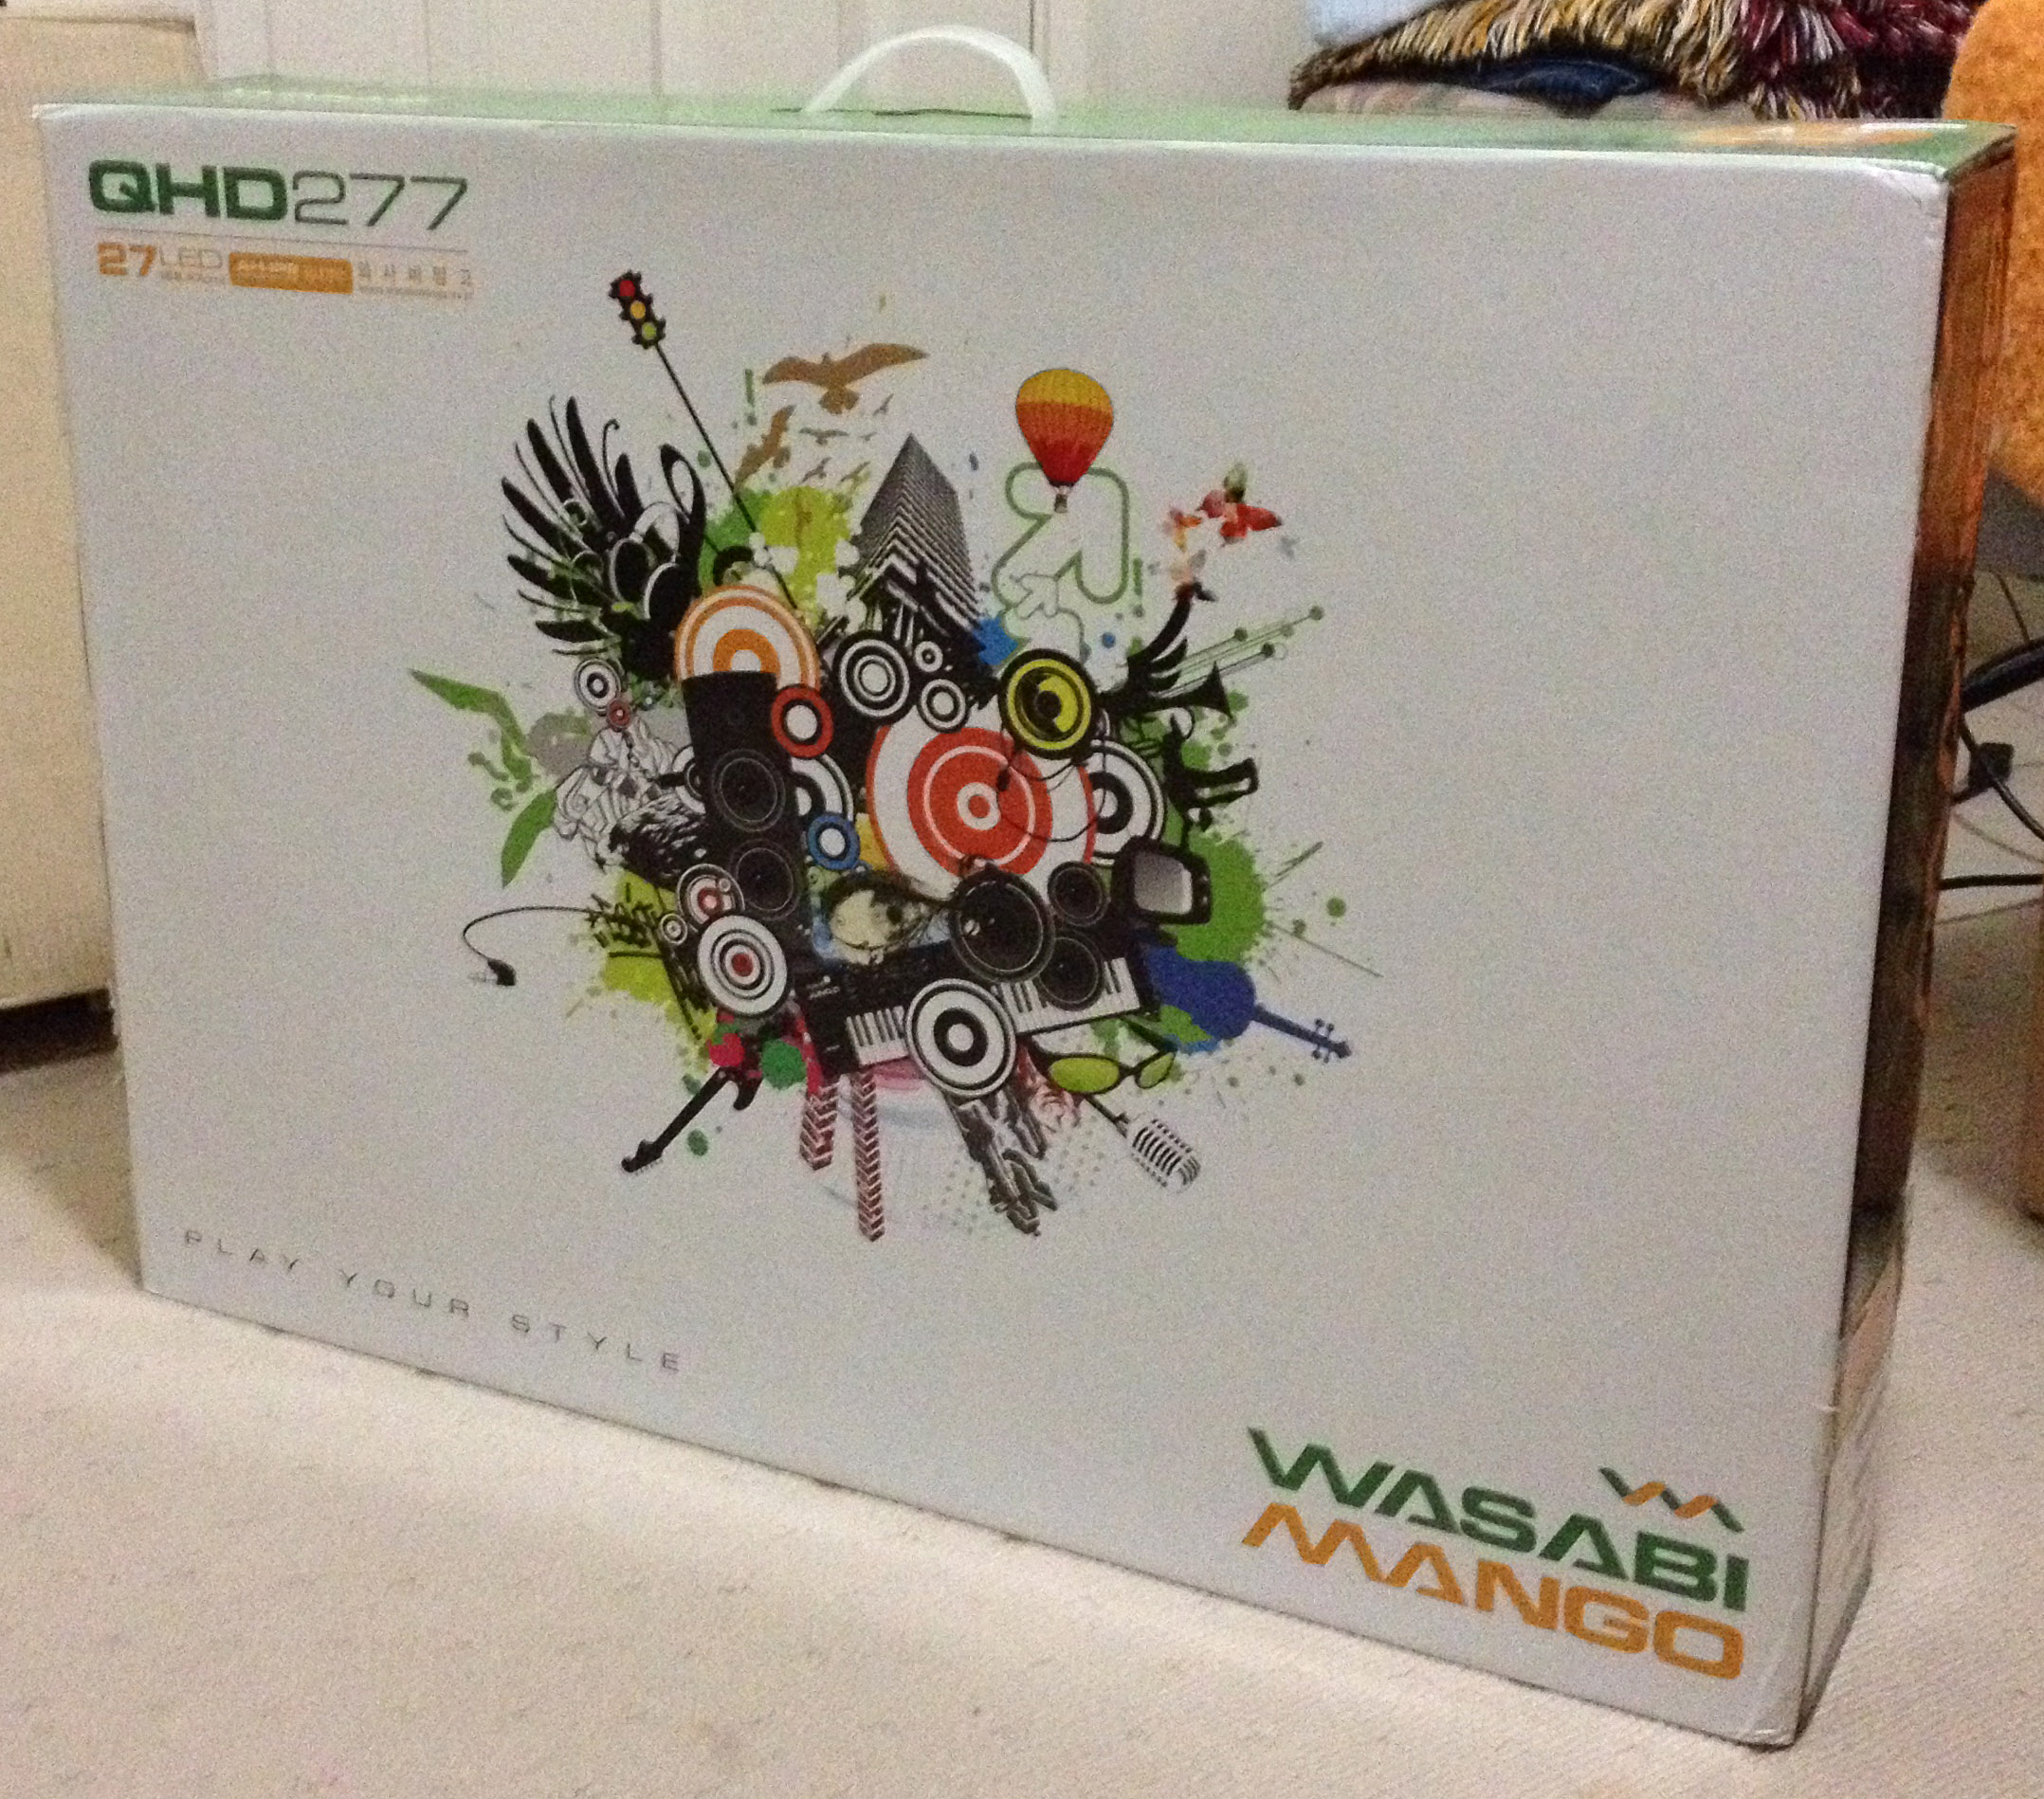 Unlike most bargain screens, the Wasabi Mango is presented very well.